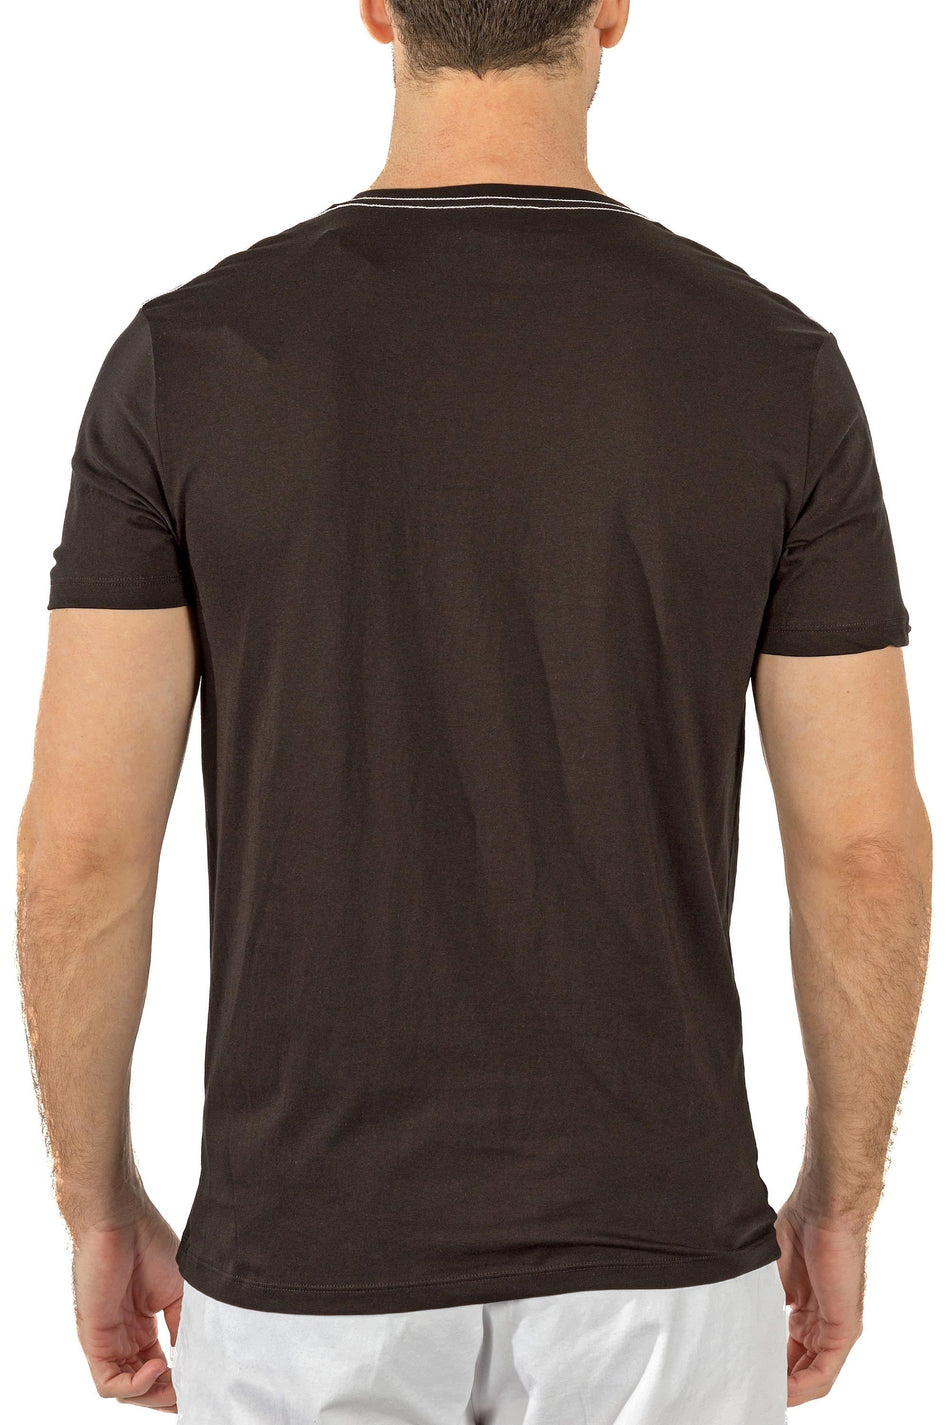 BESPOKE SPORT - Black Mens T Shirt - 161580 - www.bespokemoda.com